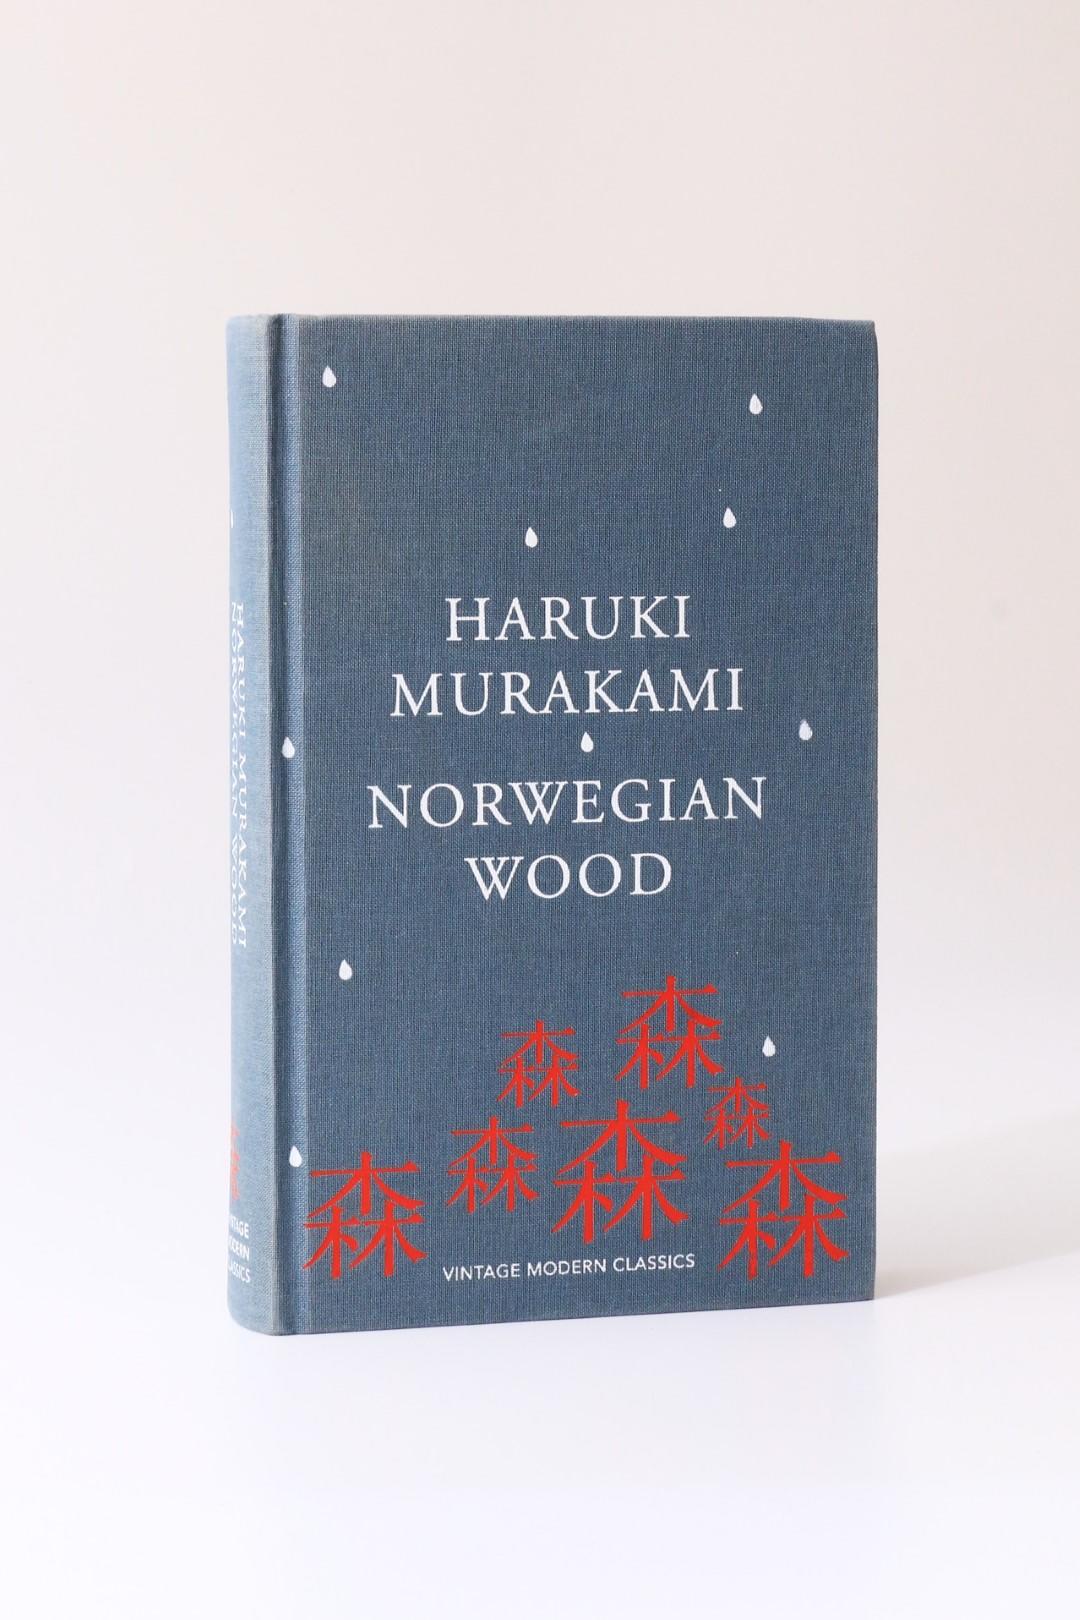 Haruki Murakami - Norwegian Wood - Vintage Books, 2010, Second Edition. Signed